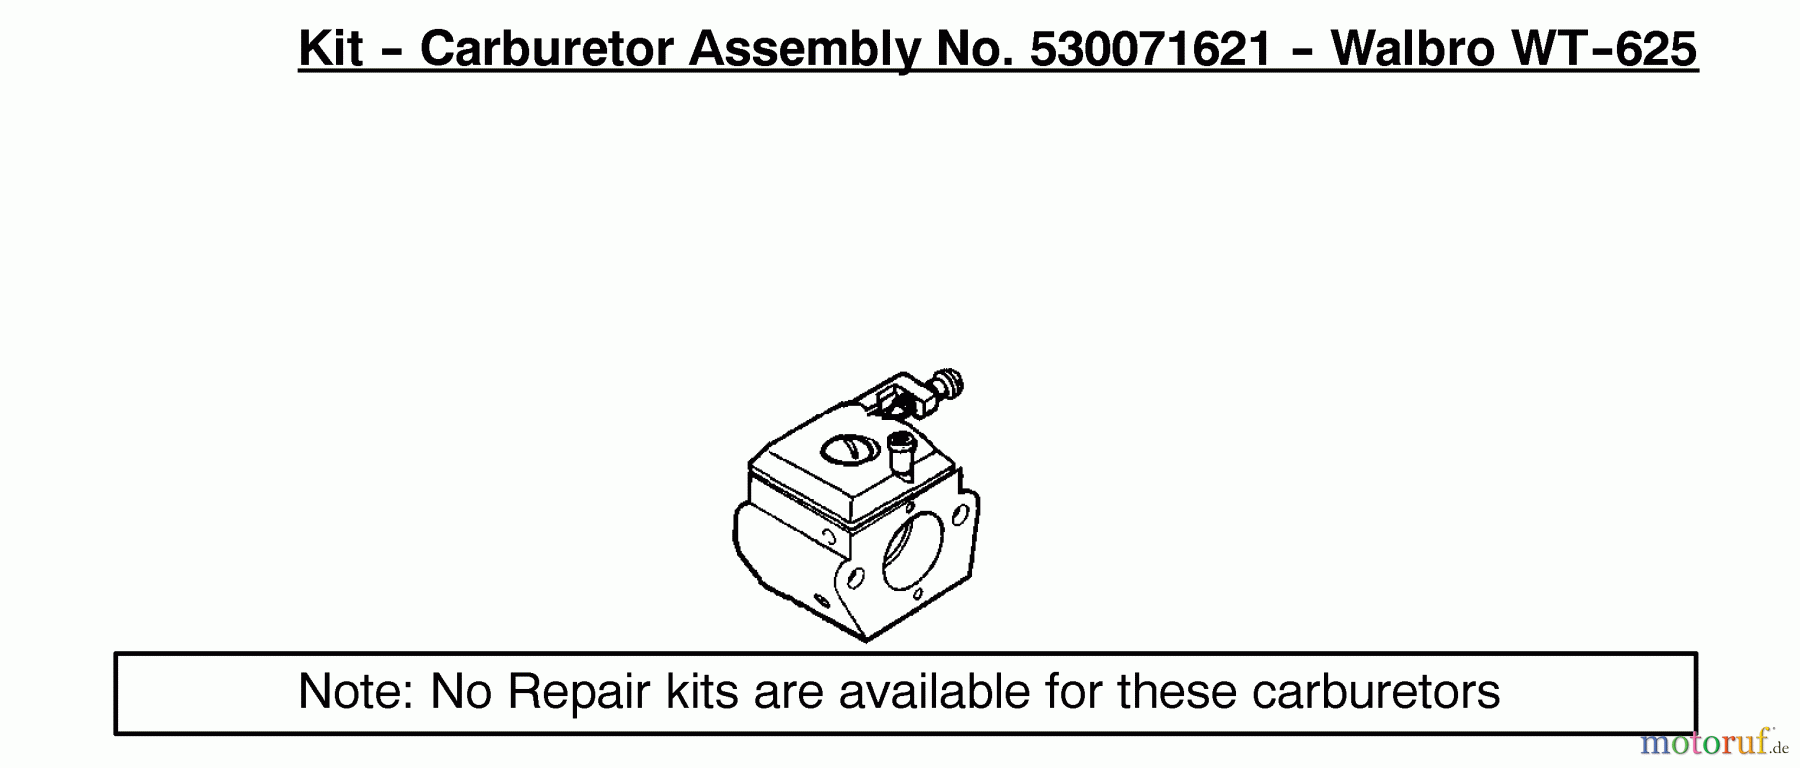  Poulan / Weed Eater Motorsägen 2550LE (Type 1) - Poulan Woodmaster Chainsaw Carburetor Assembly Kit (WT-625) 530071621